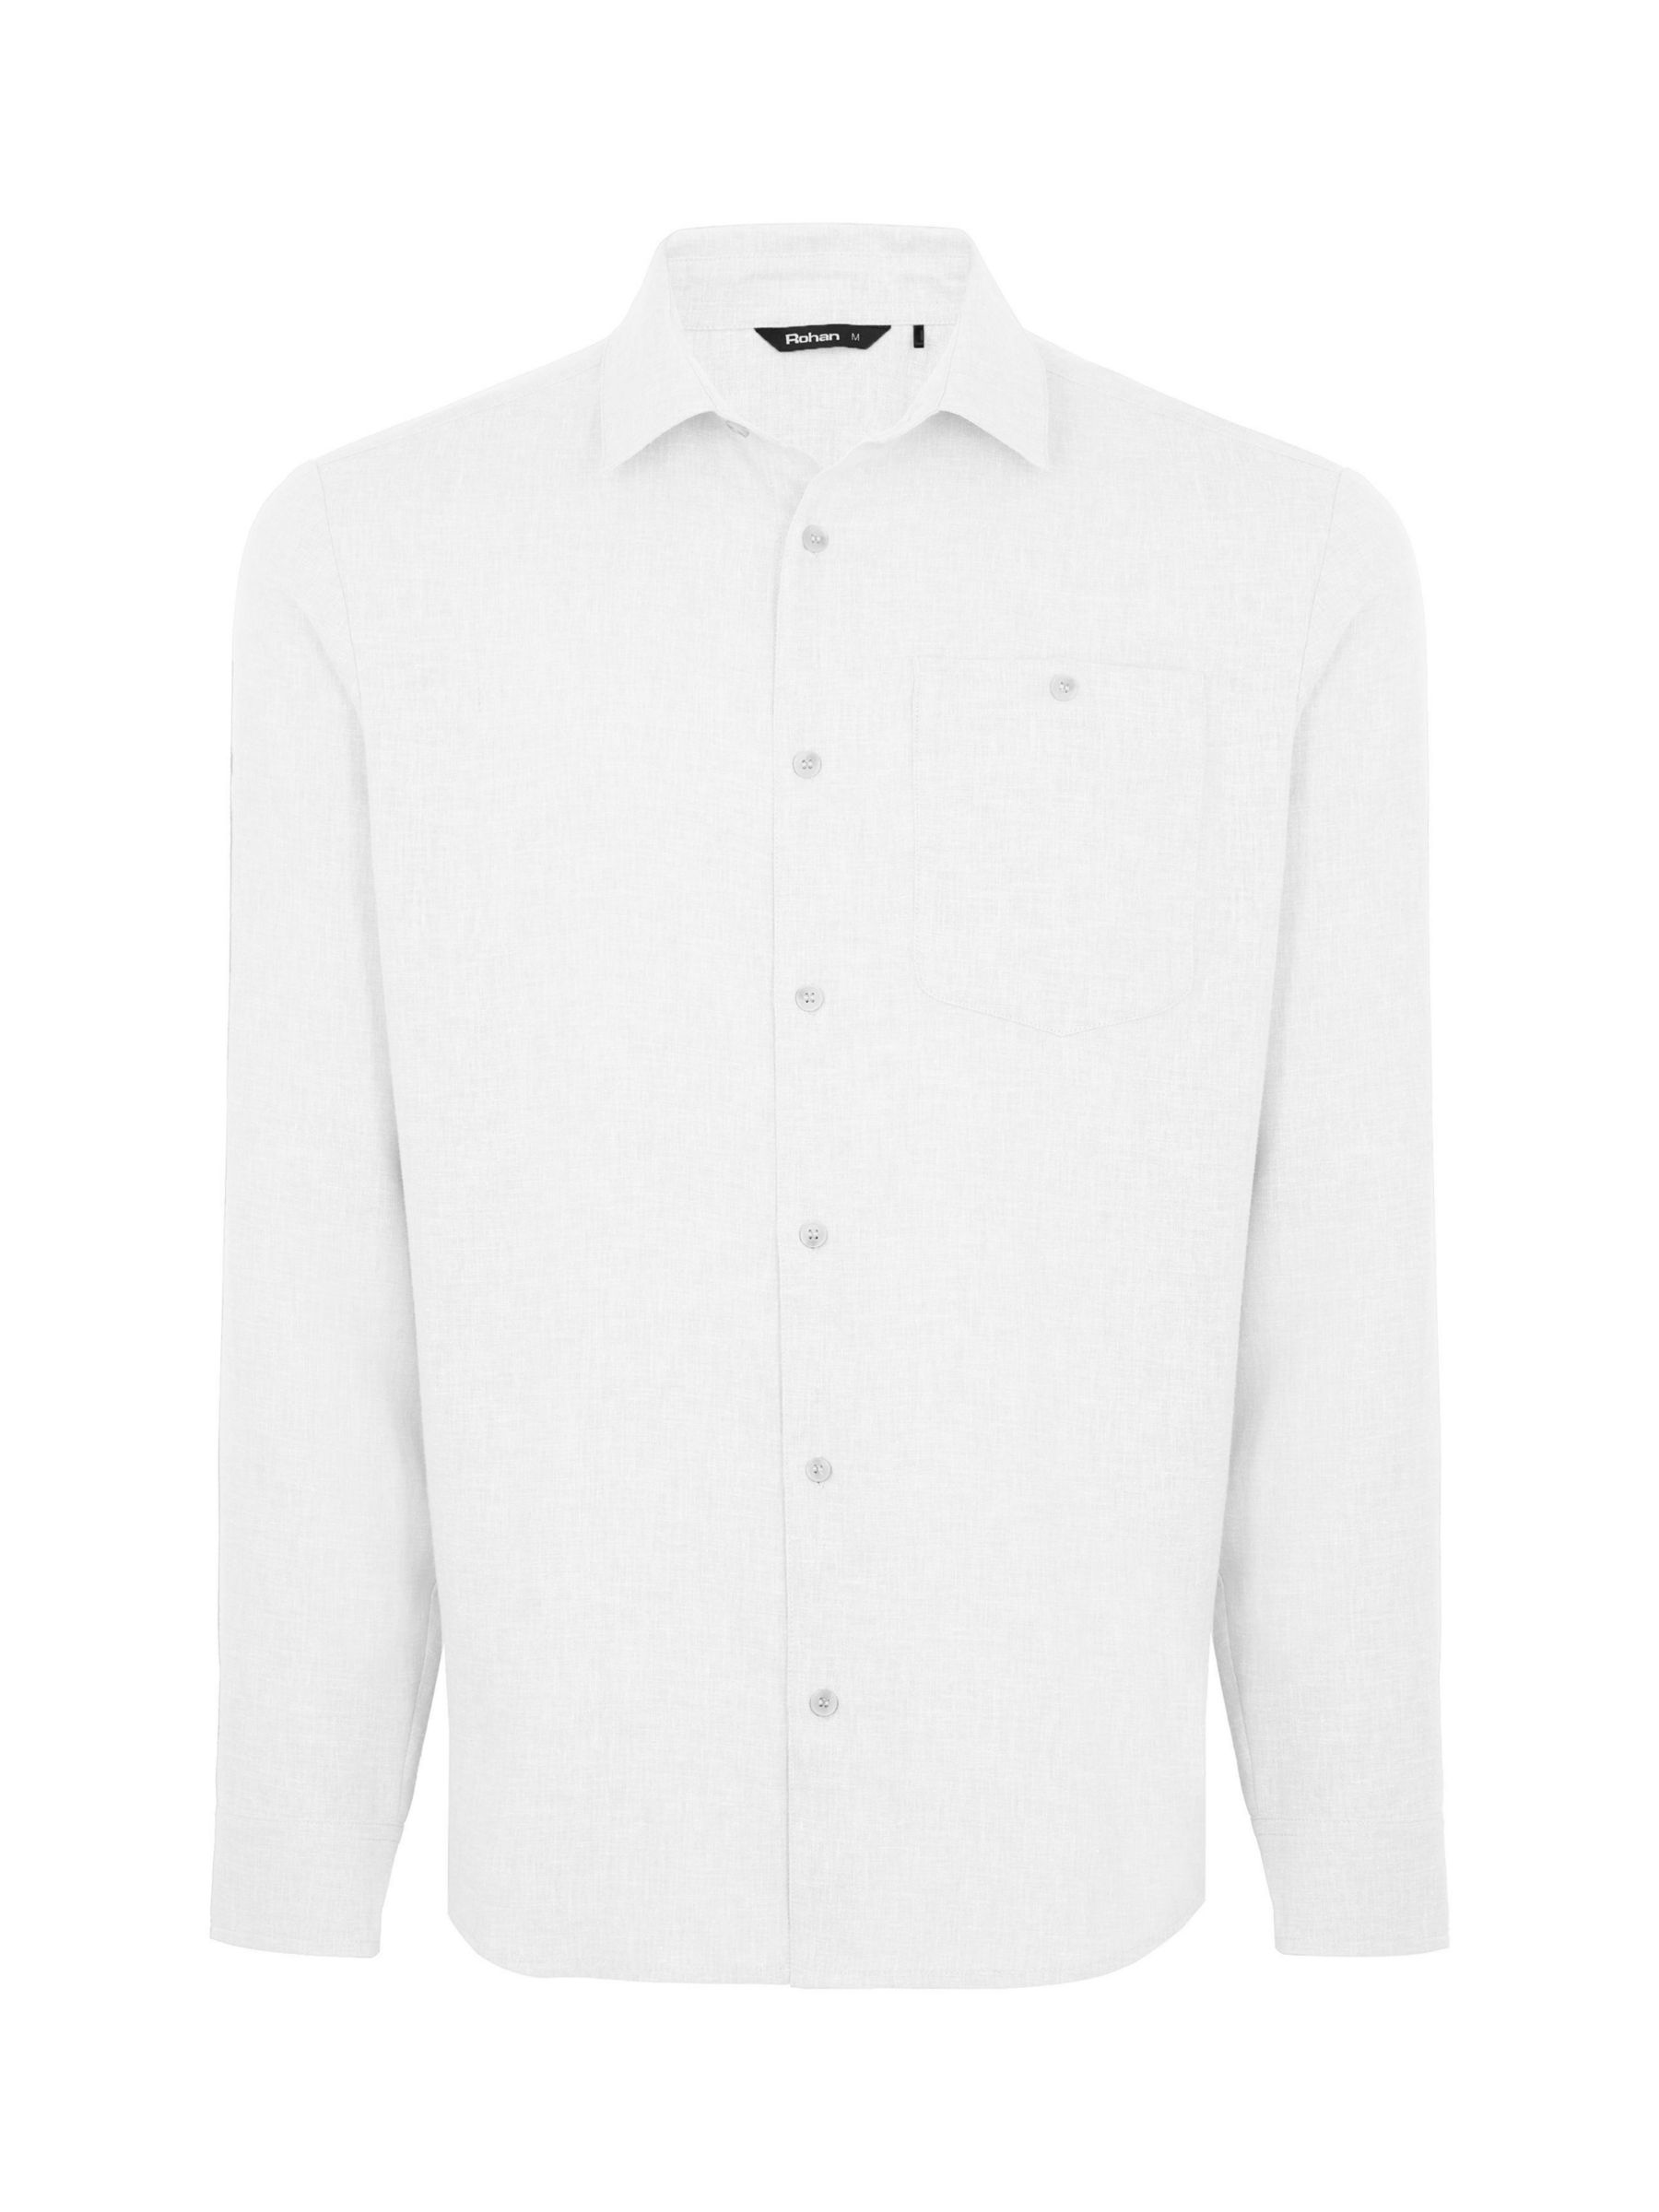 Buy Rohan Porto Linen Long Sleeve Shirt, White Online at johnlewis.com